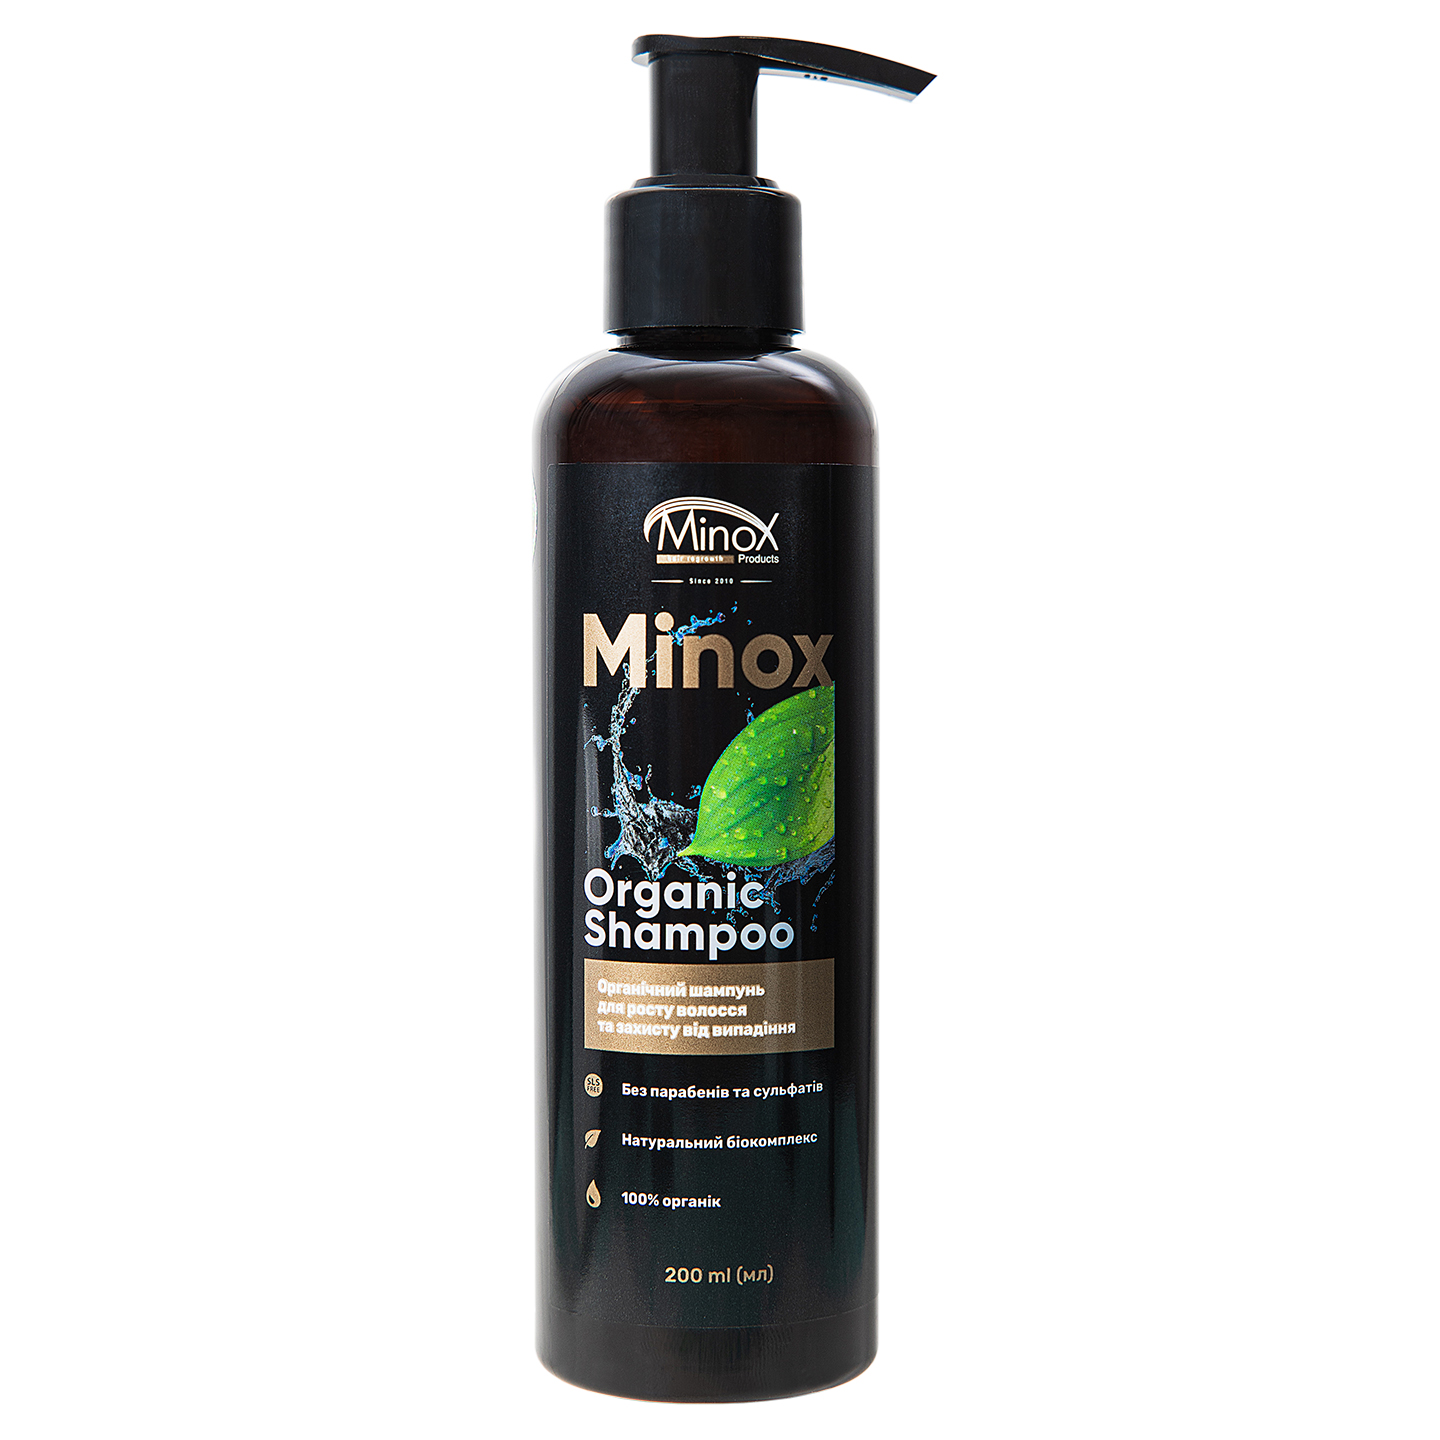 99 organic shampoo 200ml